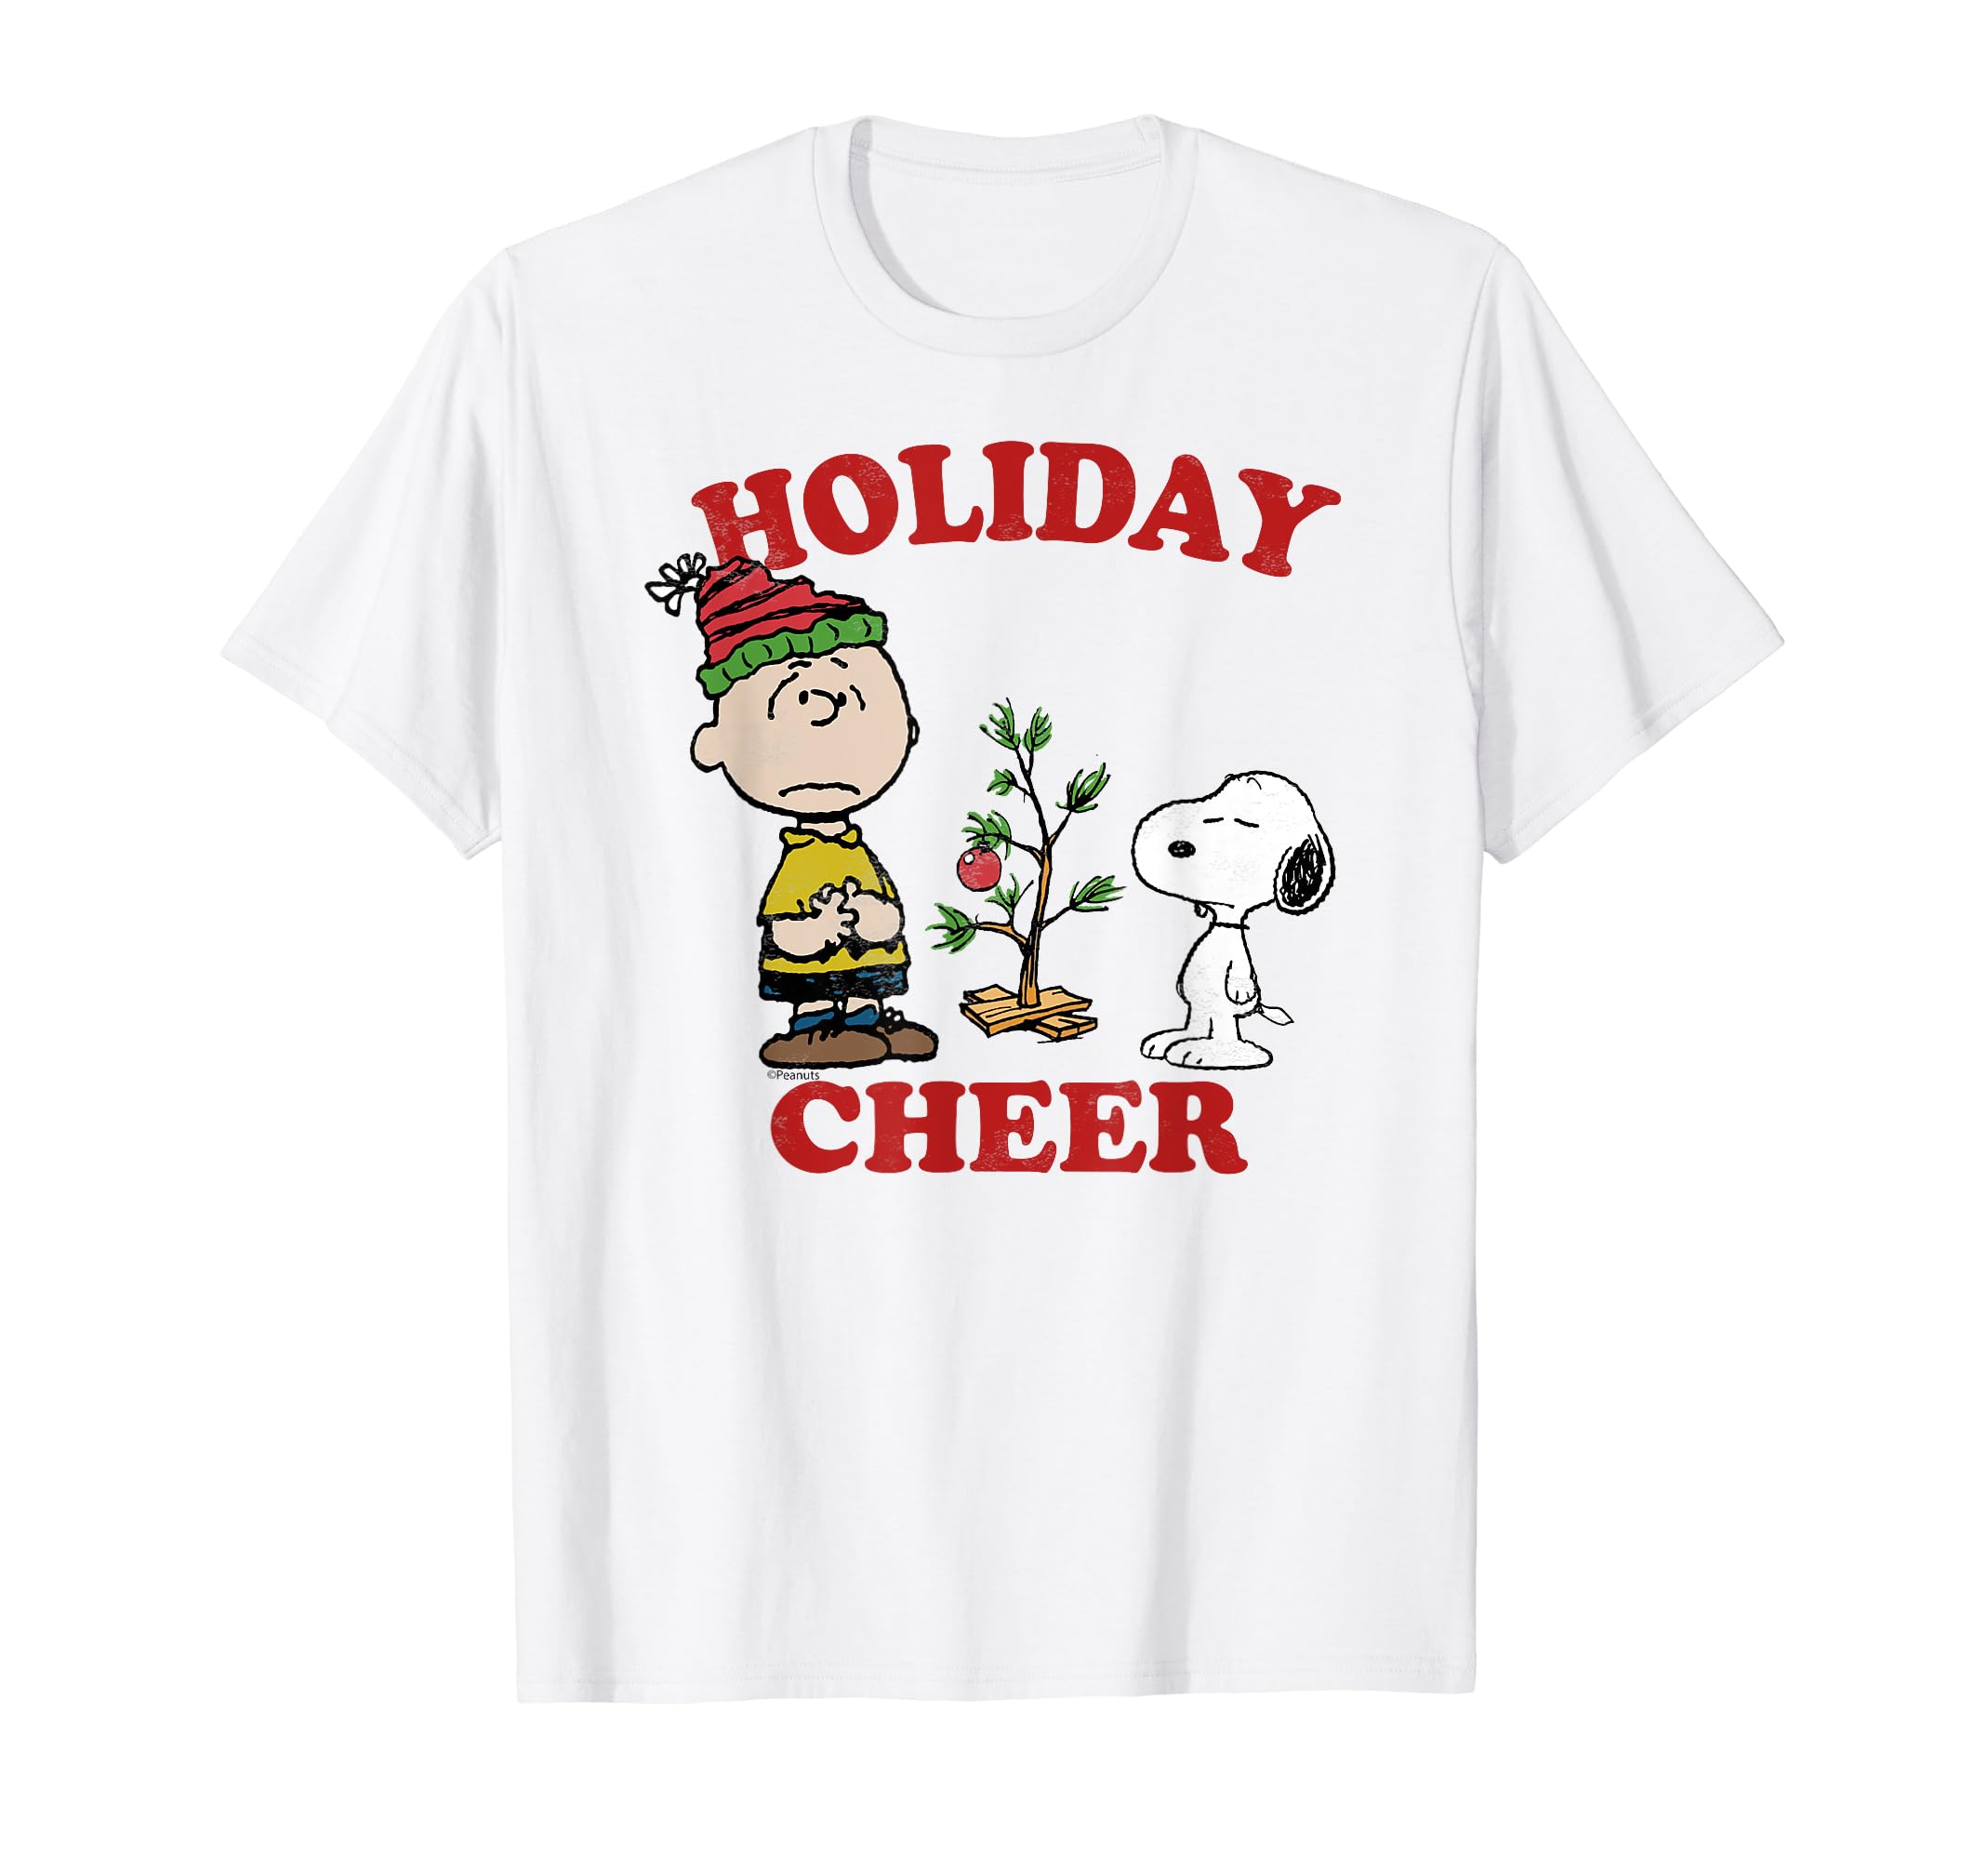 Peanuts Snoopy and Charlie Holiday Cheer T-Shirt